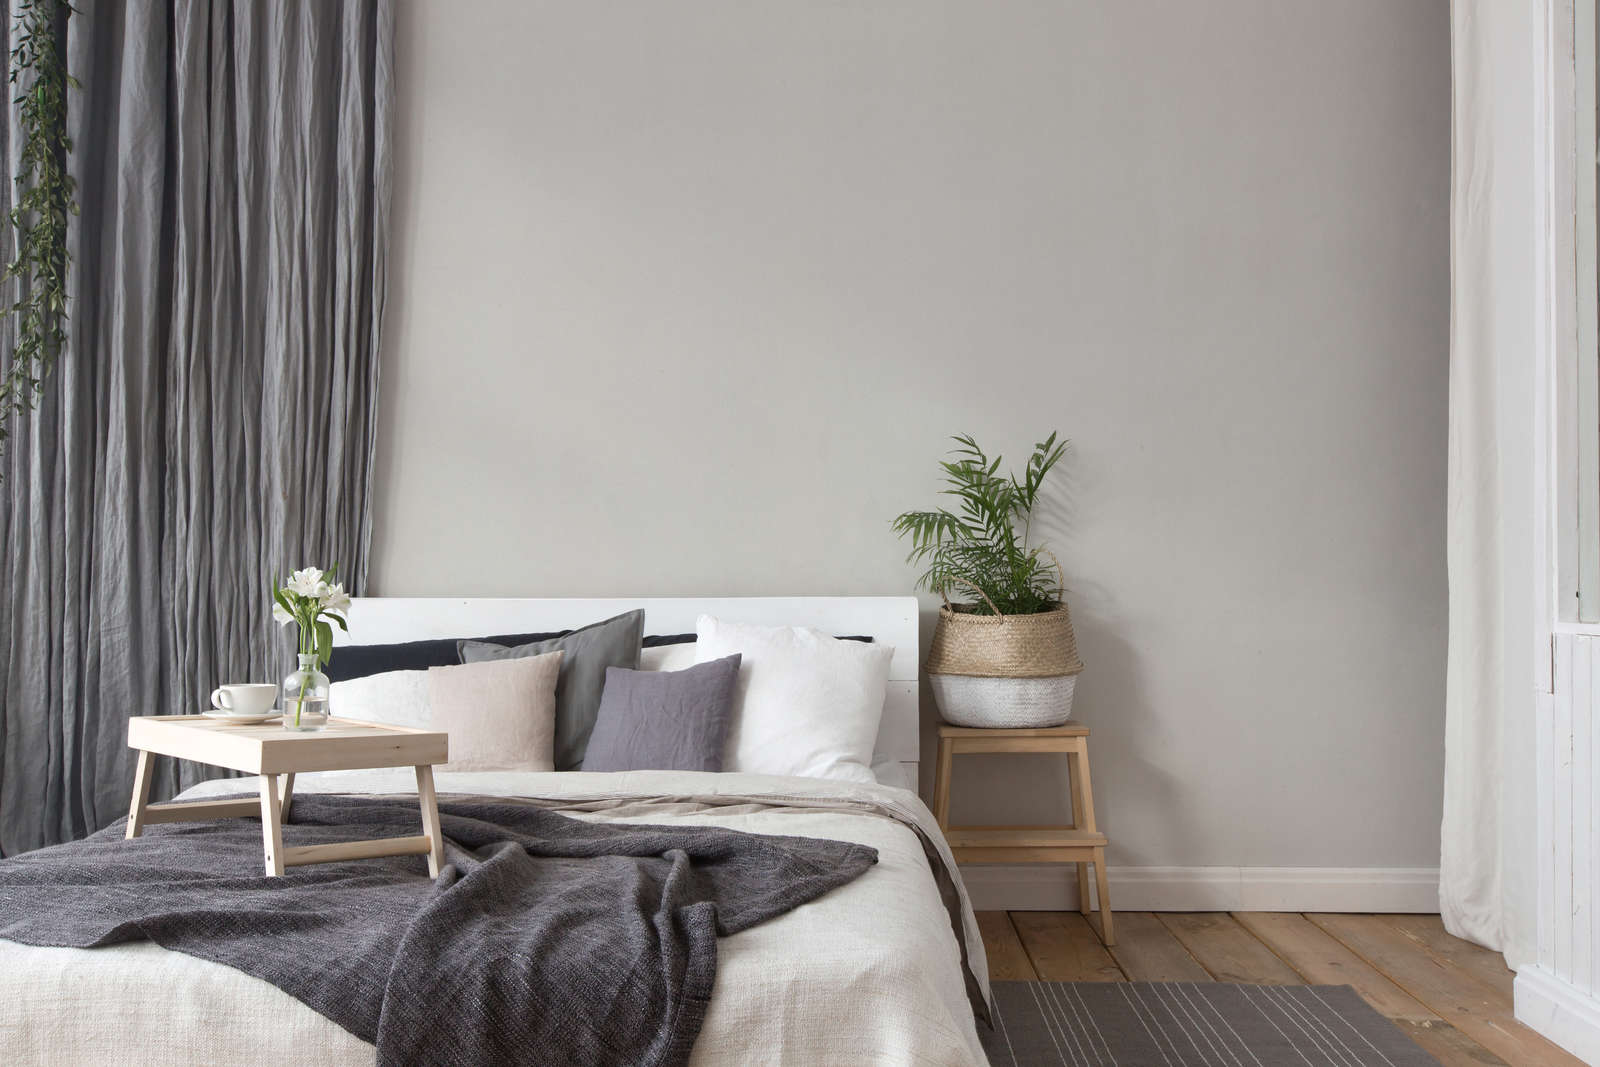             Plain wallpaper with a light textured look - grey
        